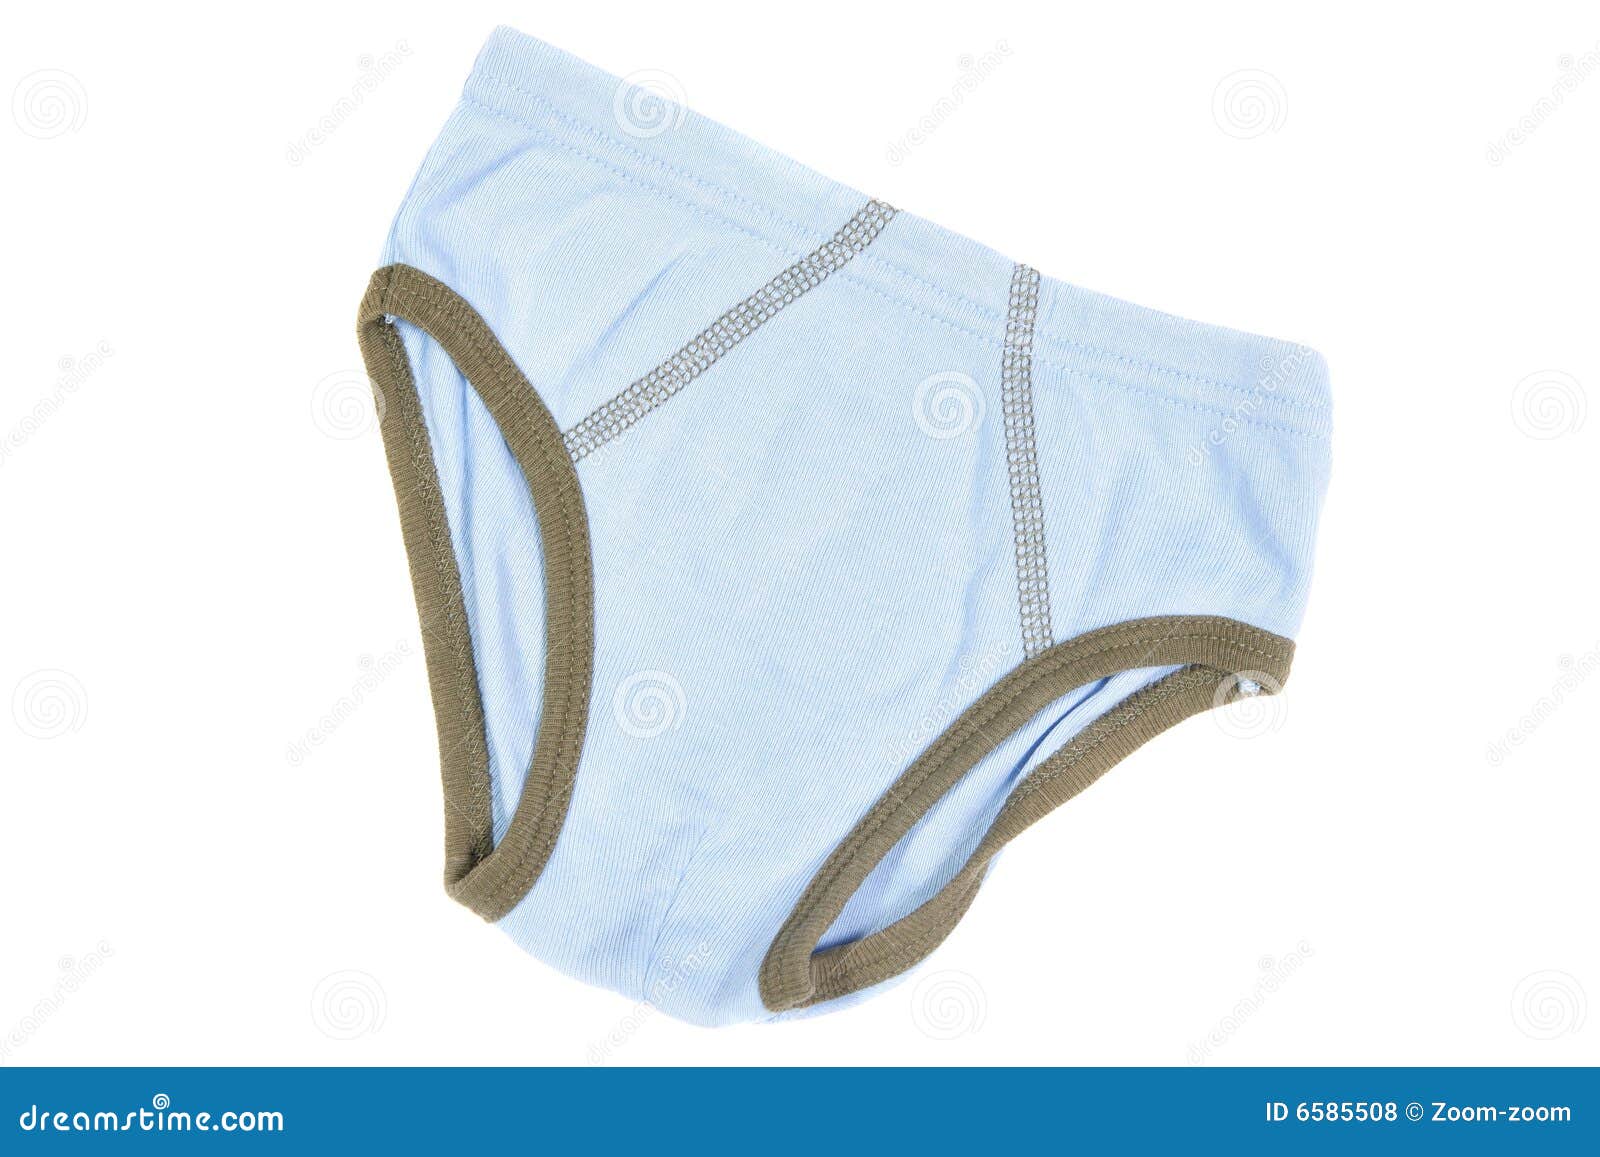 Boys pants stock photo. Image of vogue, small, fashionable - 6585508